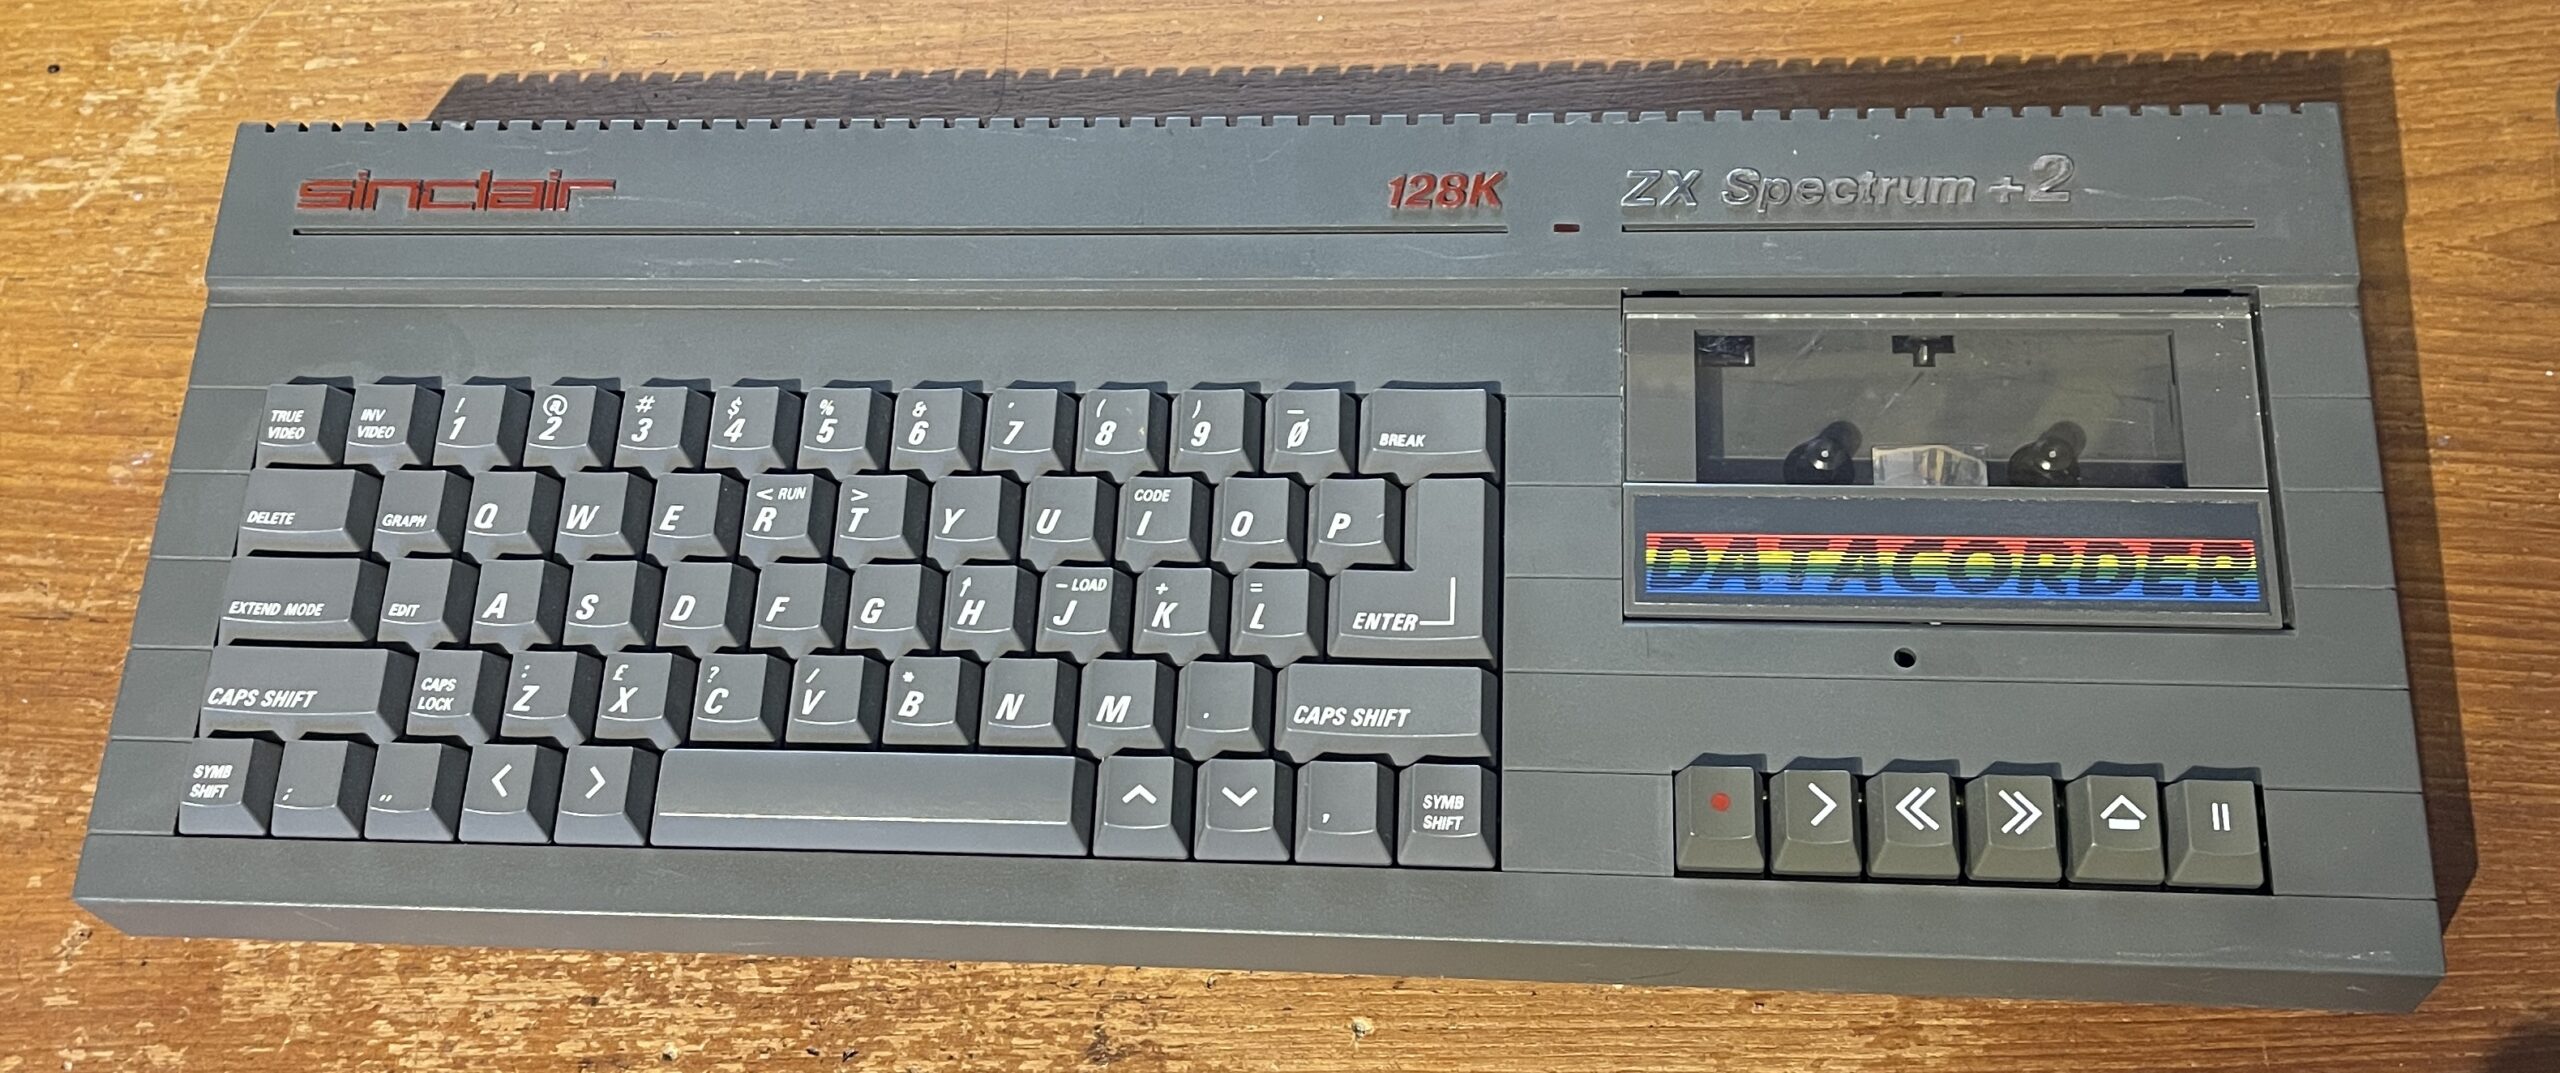 Sinclair ZX Spectrum +2 (Grey) - Andy's Retro Computing Collection